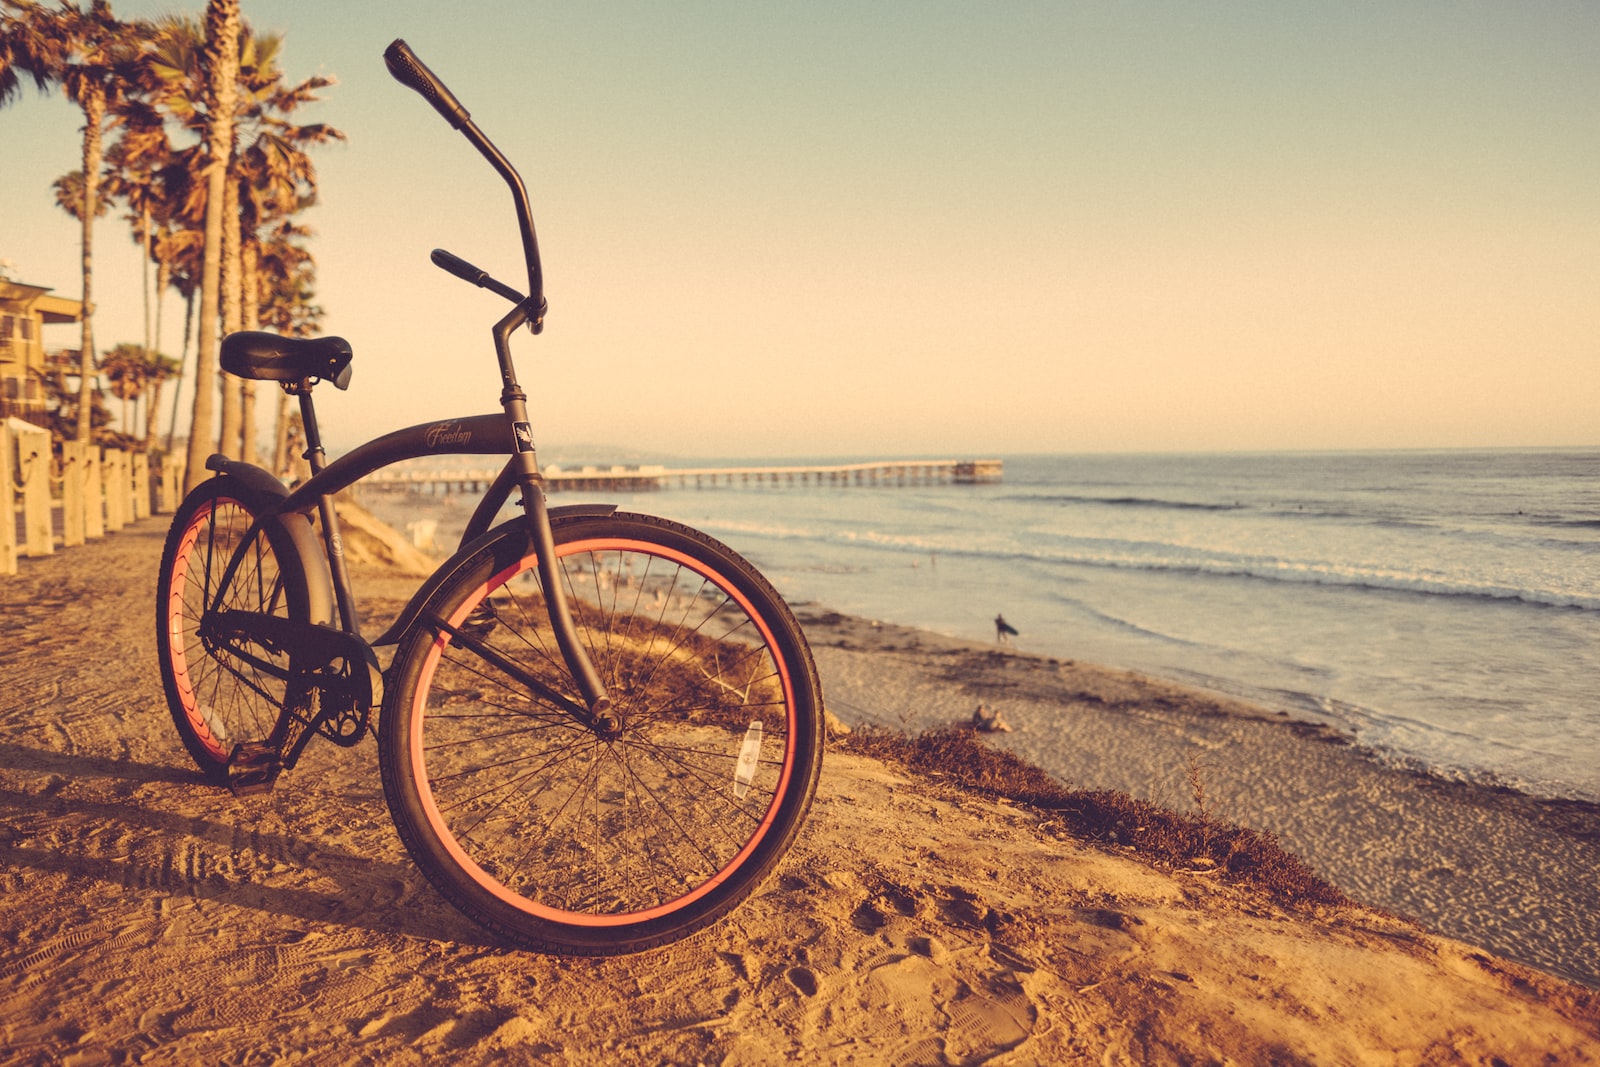 Beach cruiser cruzer bike on seashore